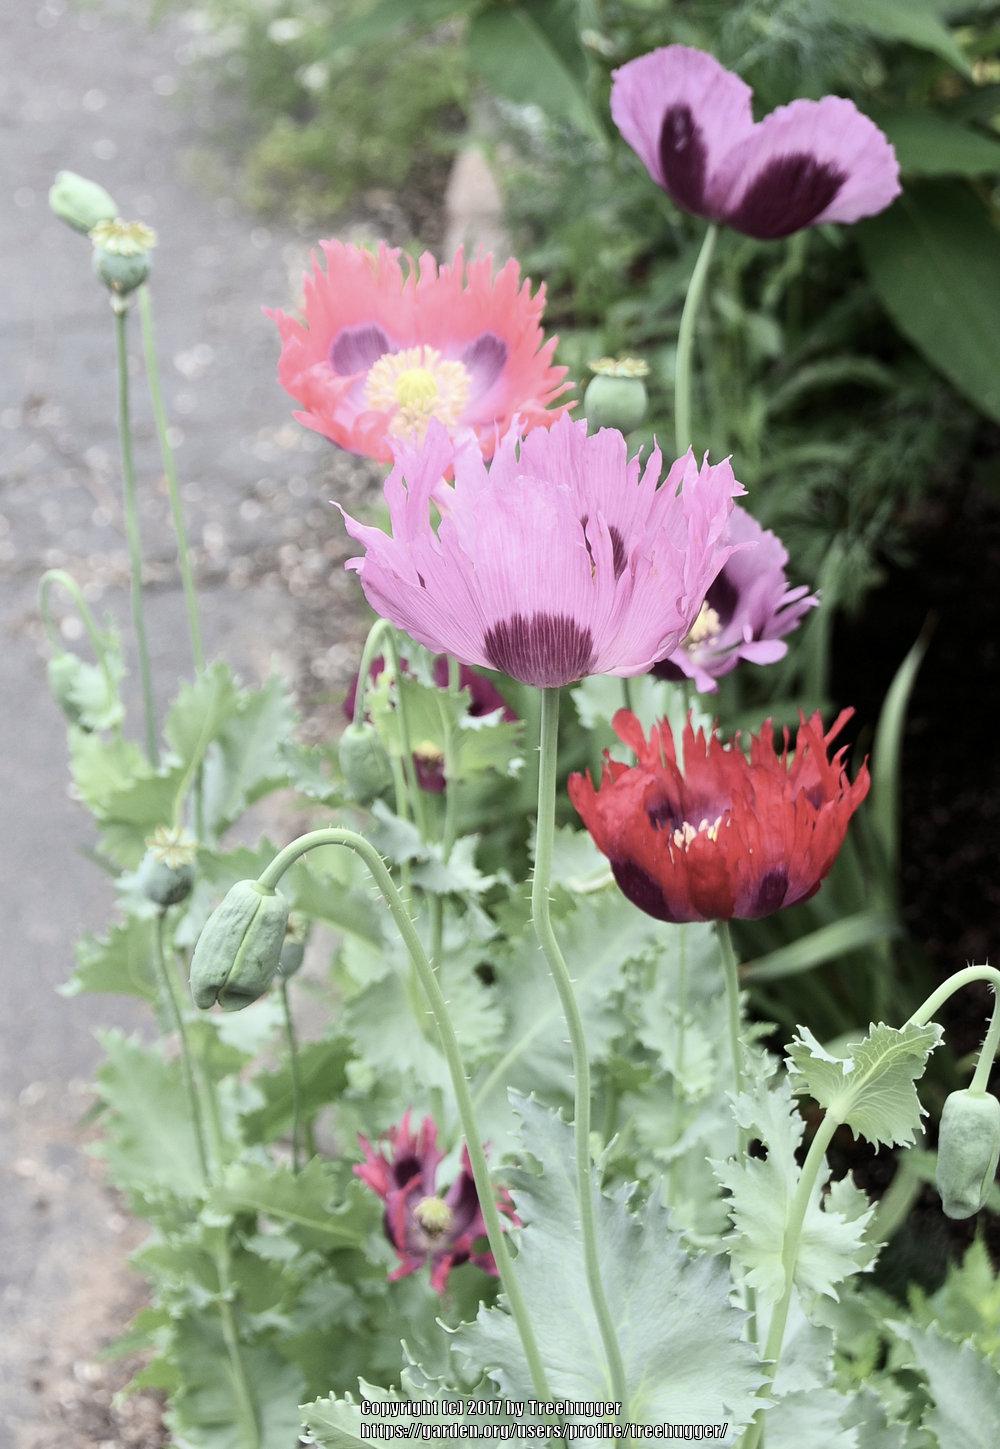 Photo of Opium Poppy (Papaver somniferum) uploaded by treehugger